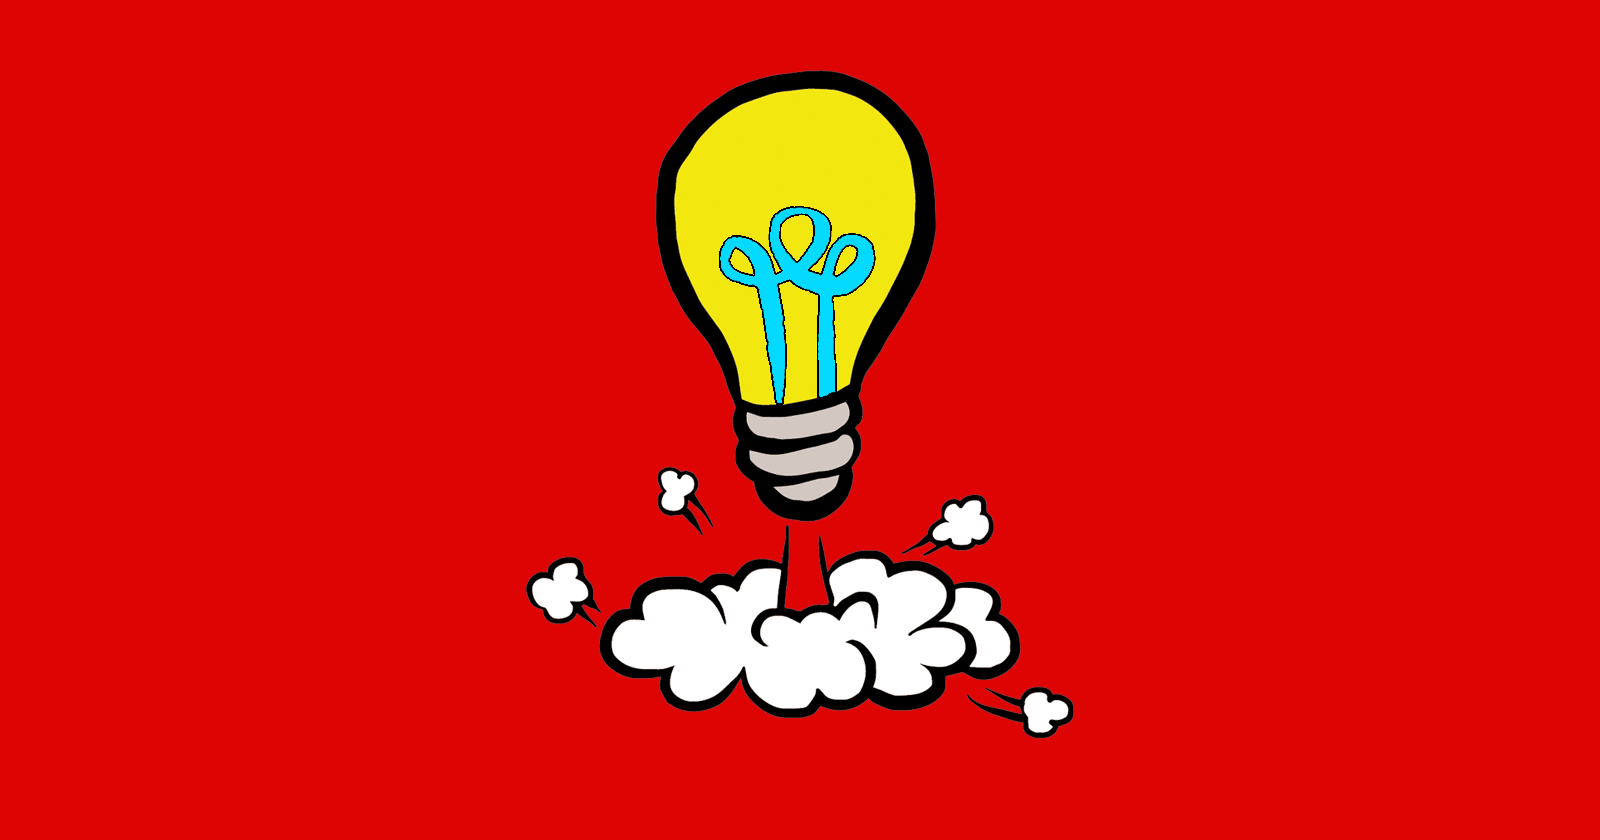 image of a light bulb representing good ideas